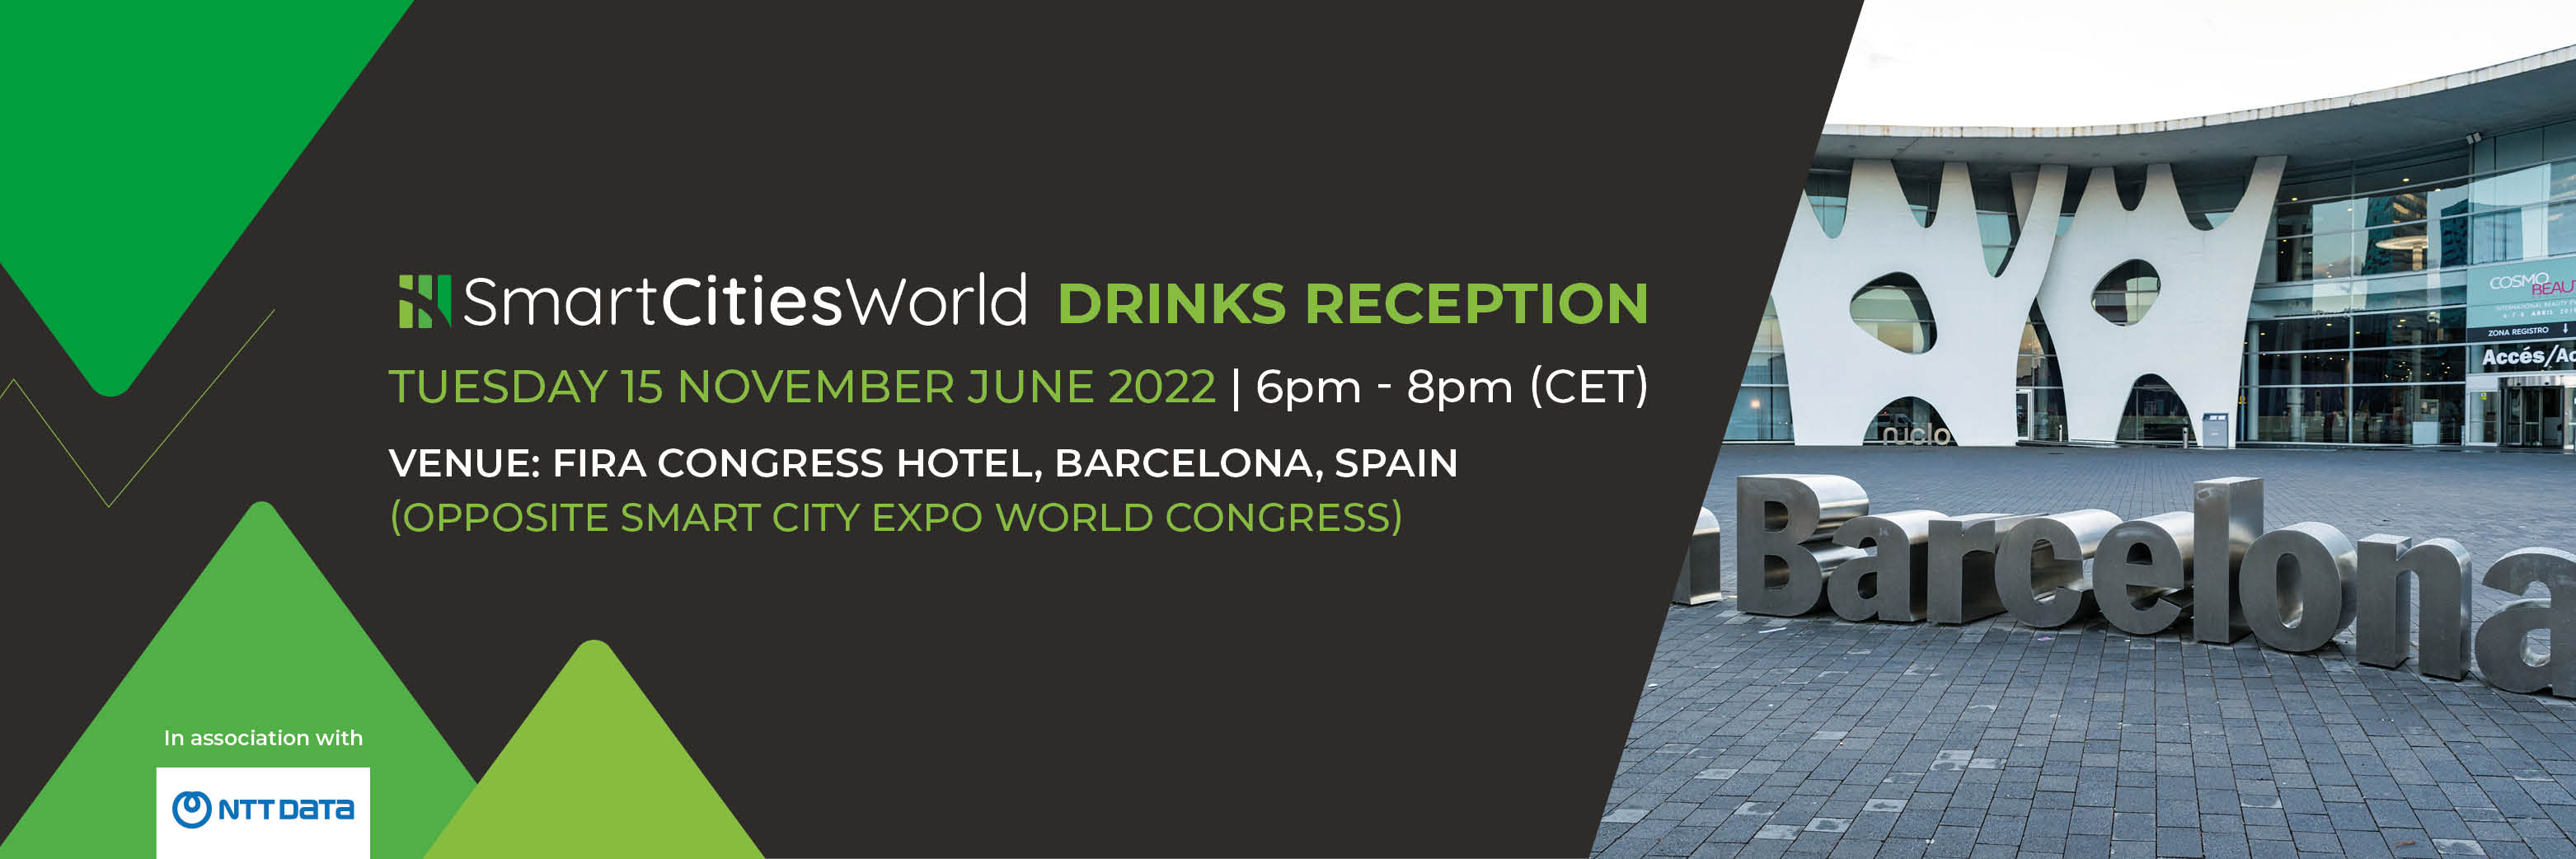 SmartCitiesWorld Drinks Reception - 15 November 2022